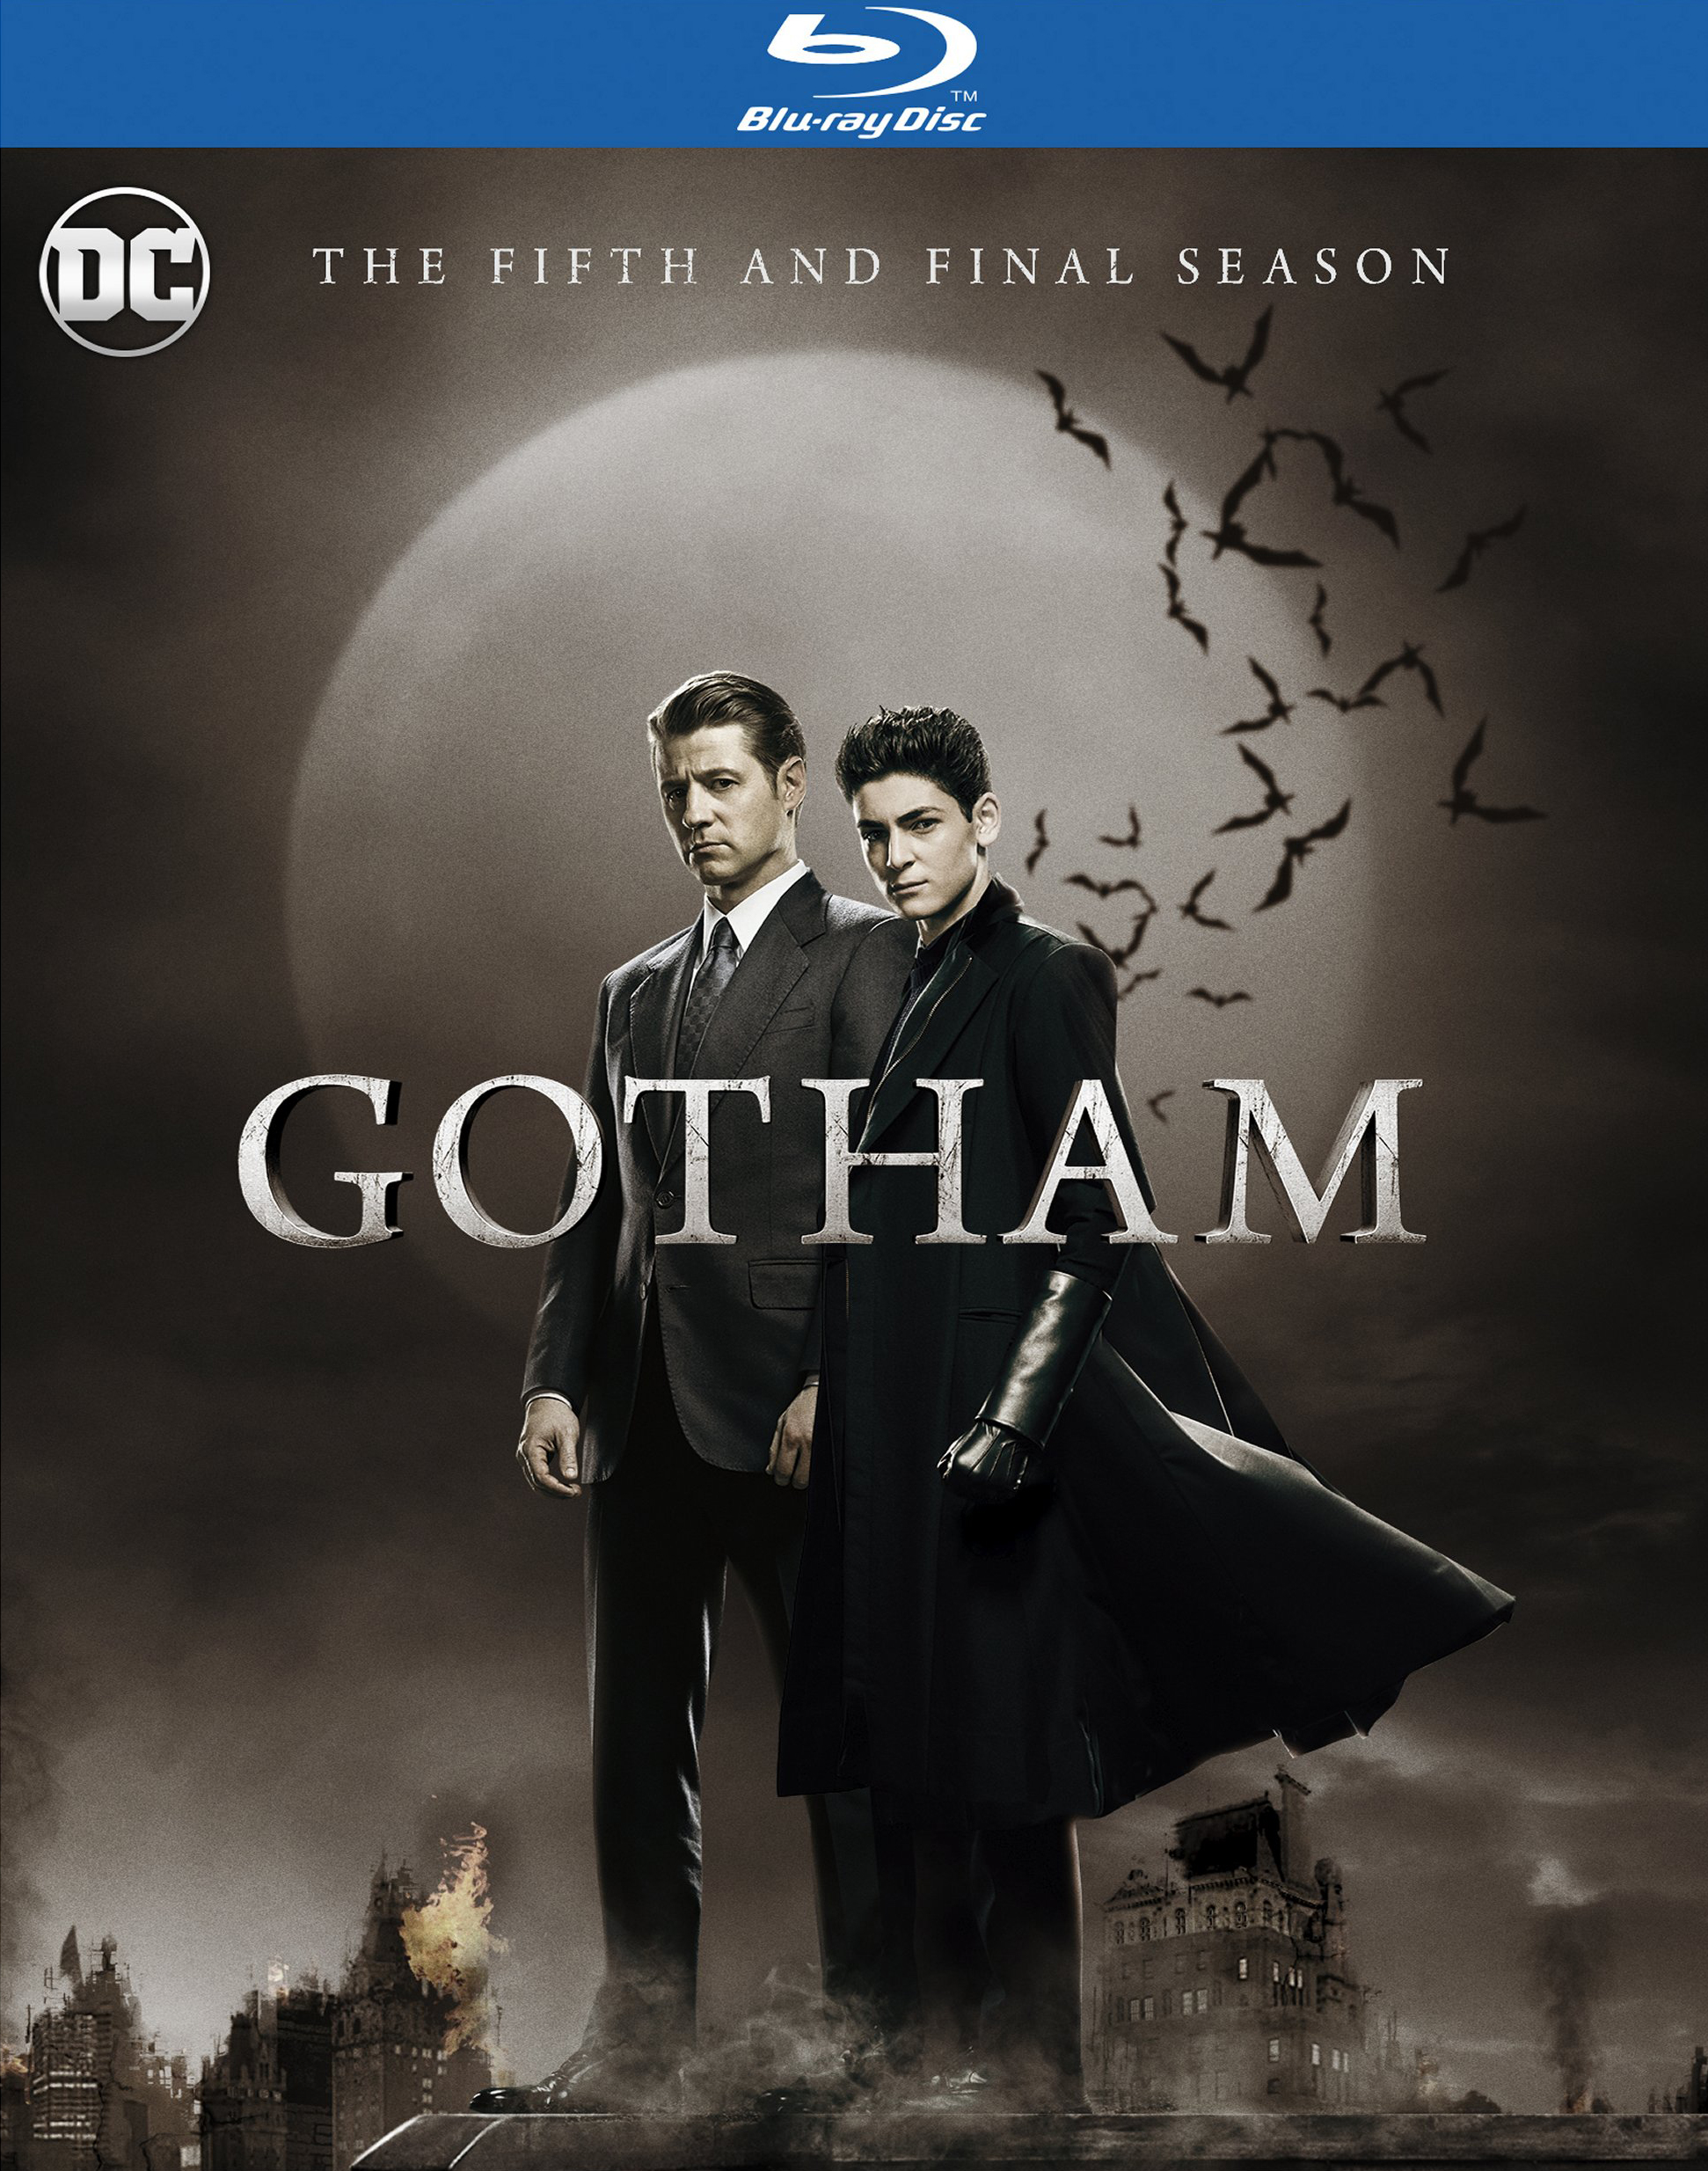 The Complete Fourth Season Blu-ray Digital Brand New In Unopened Box! Gotham 